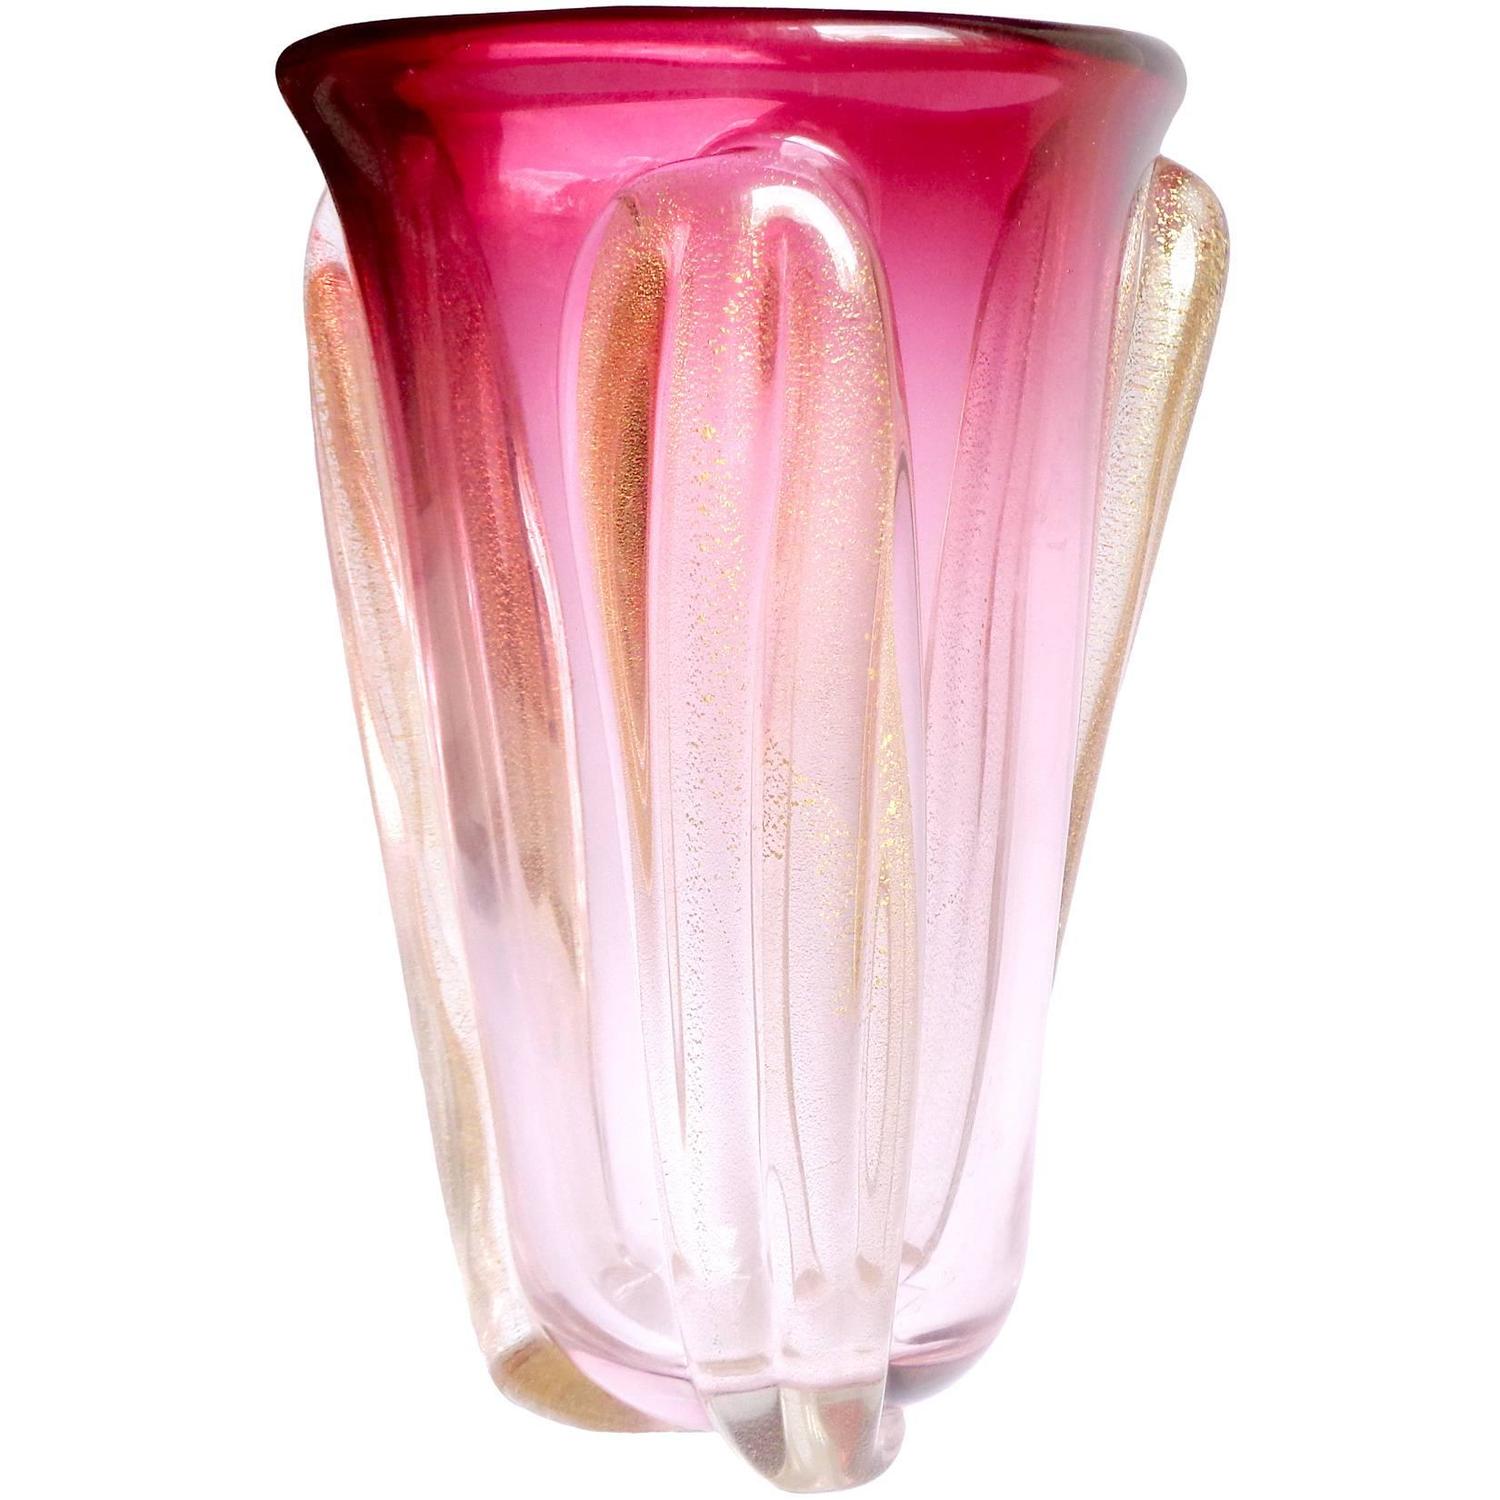 Seguso Murano Pink Sommerso And Gold Flecks Italian Art Glass Vase For Sale At 1stdibs